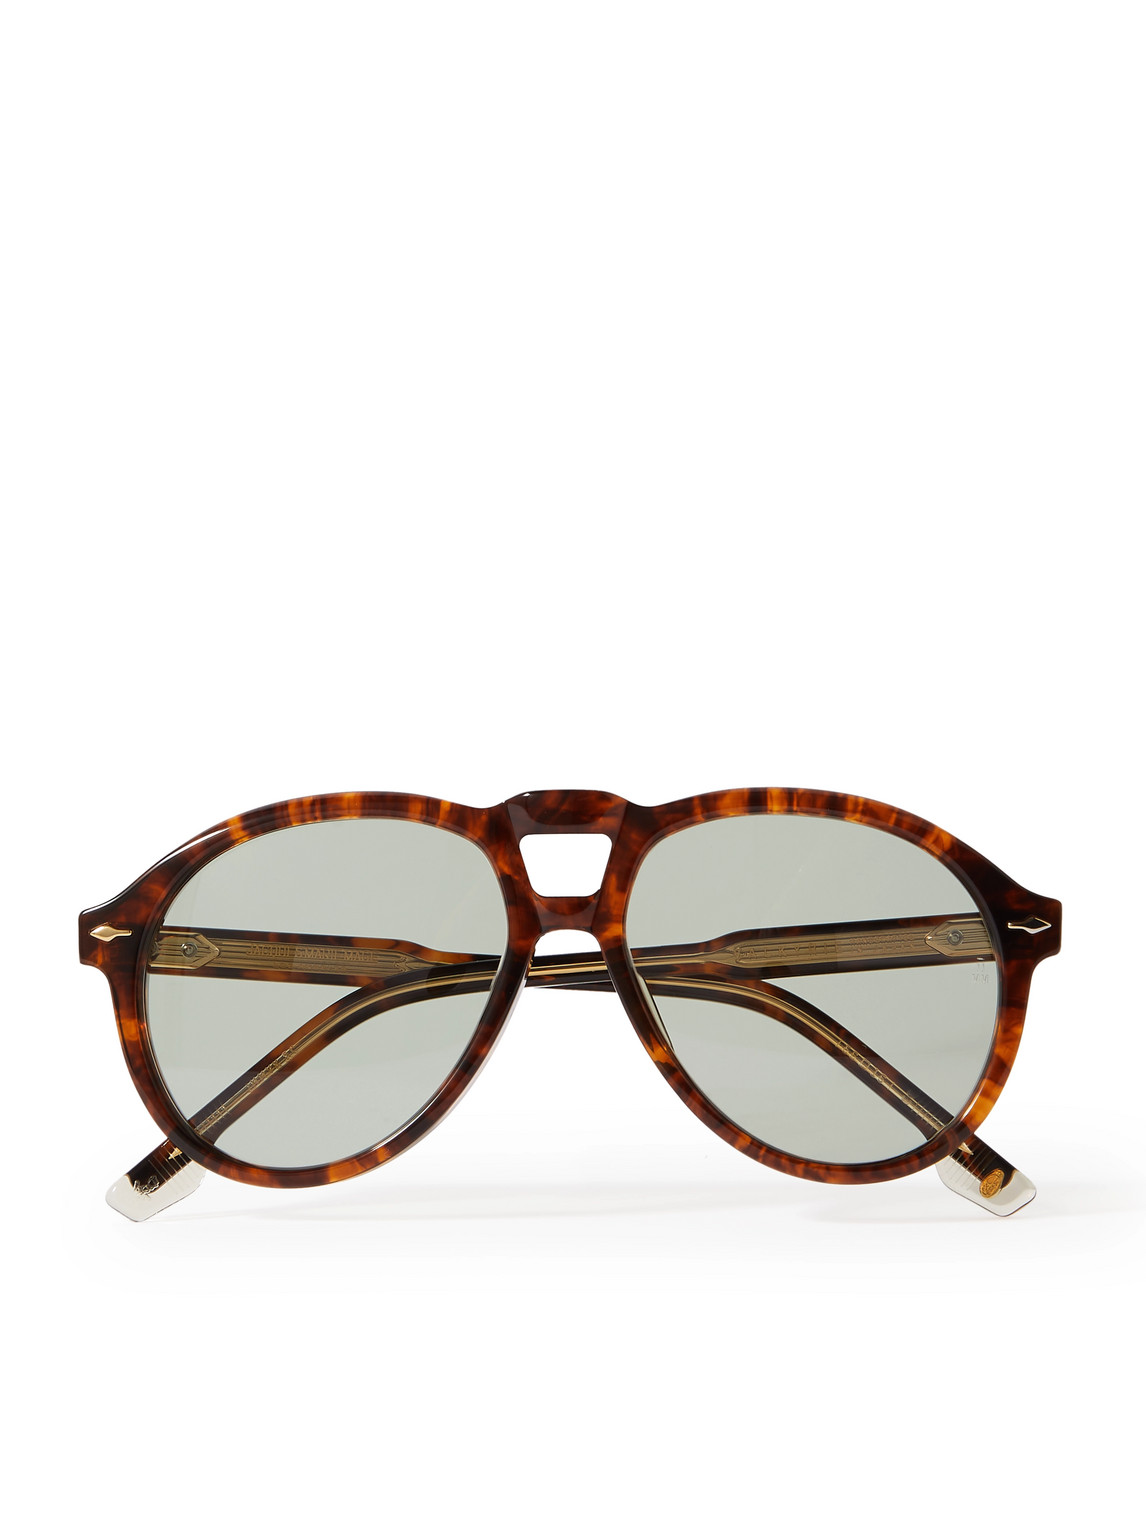 Jacques Marie Mage Valkyrie Aviator-style Tortoiseshell Acetate Sunglasses